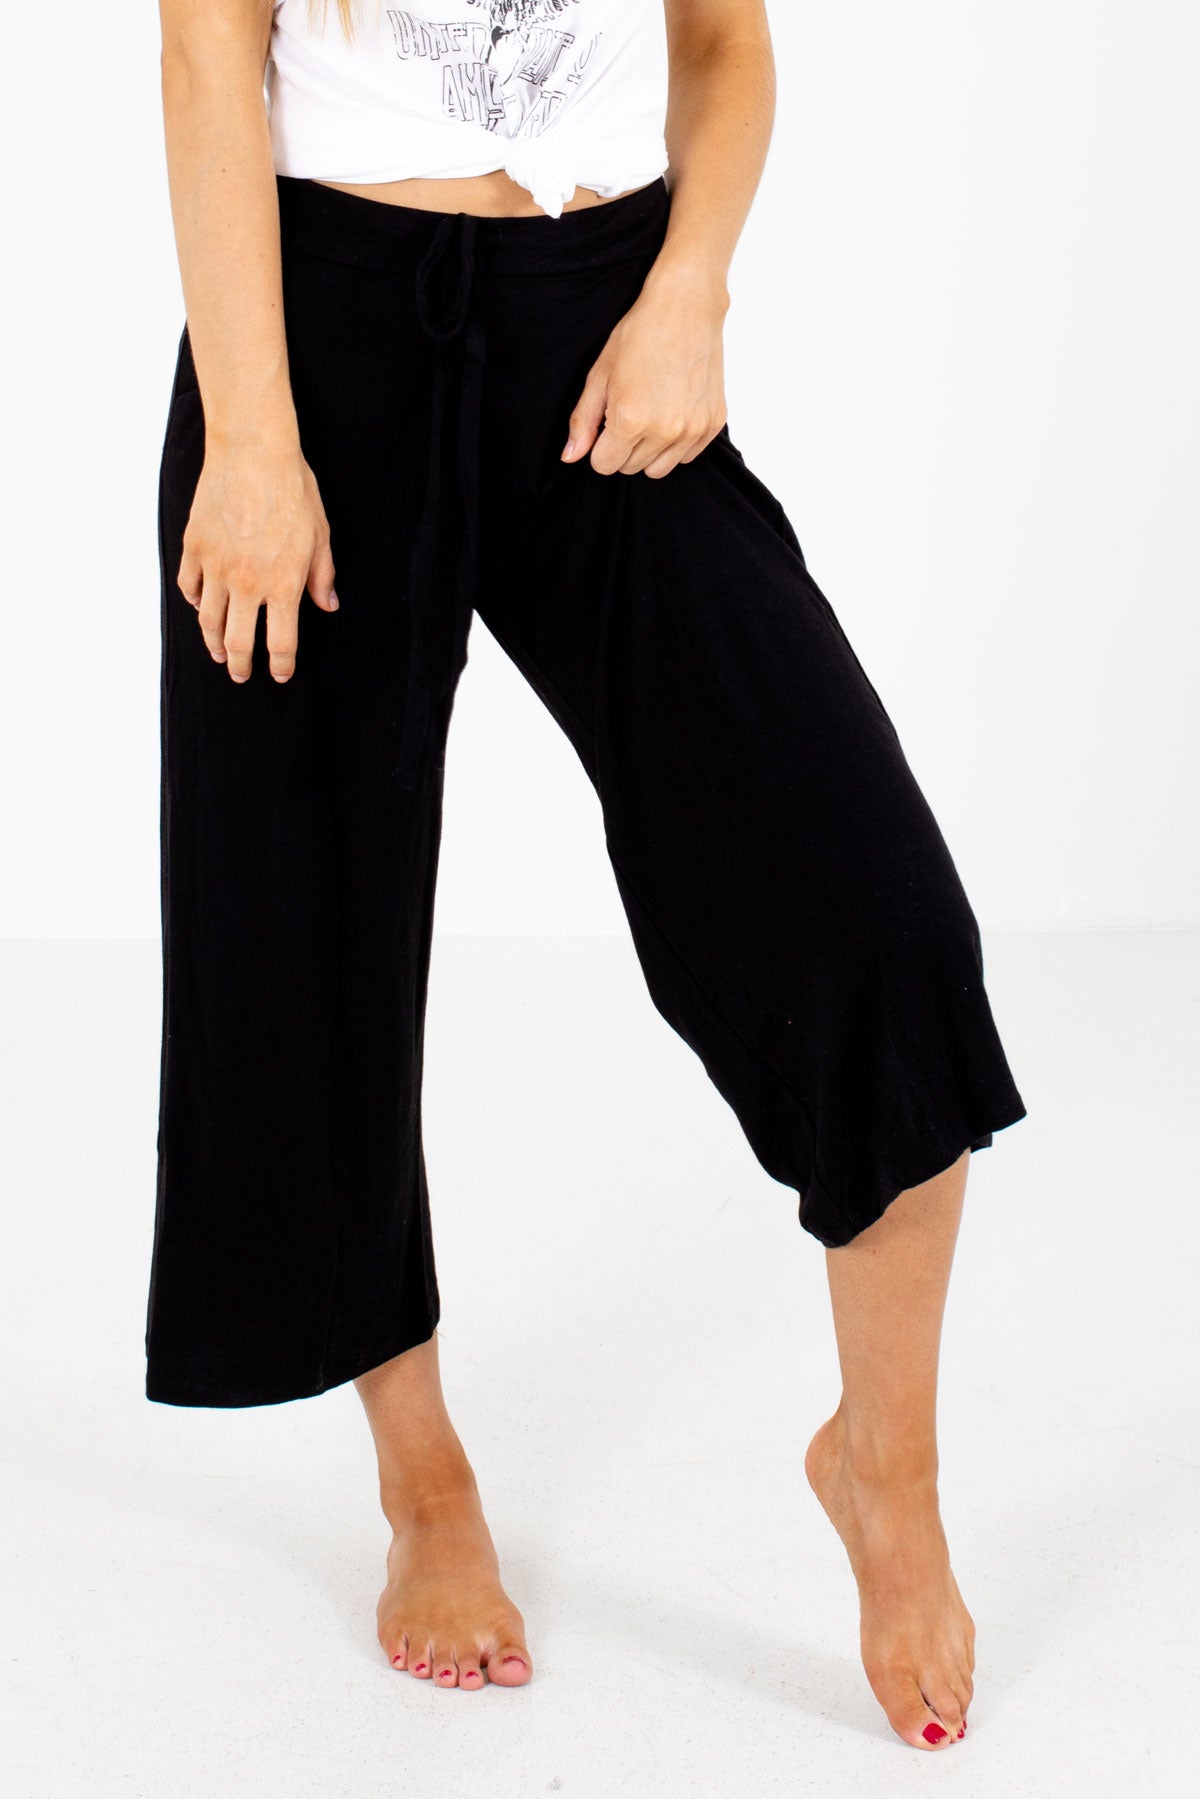 Black Cropped Length Boutique Pants for Women